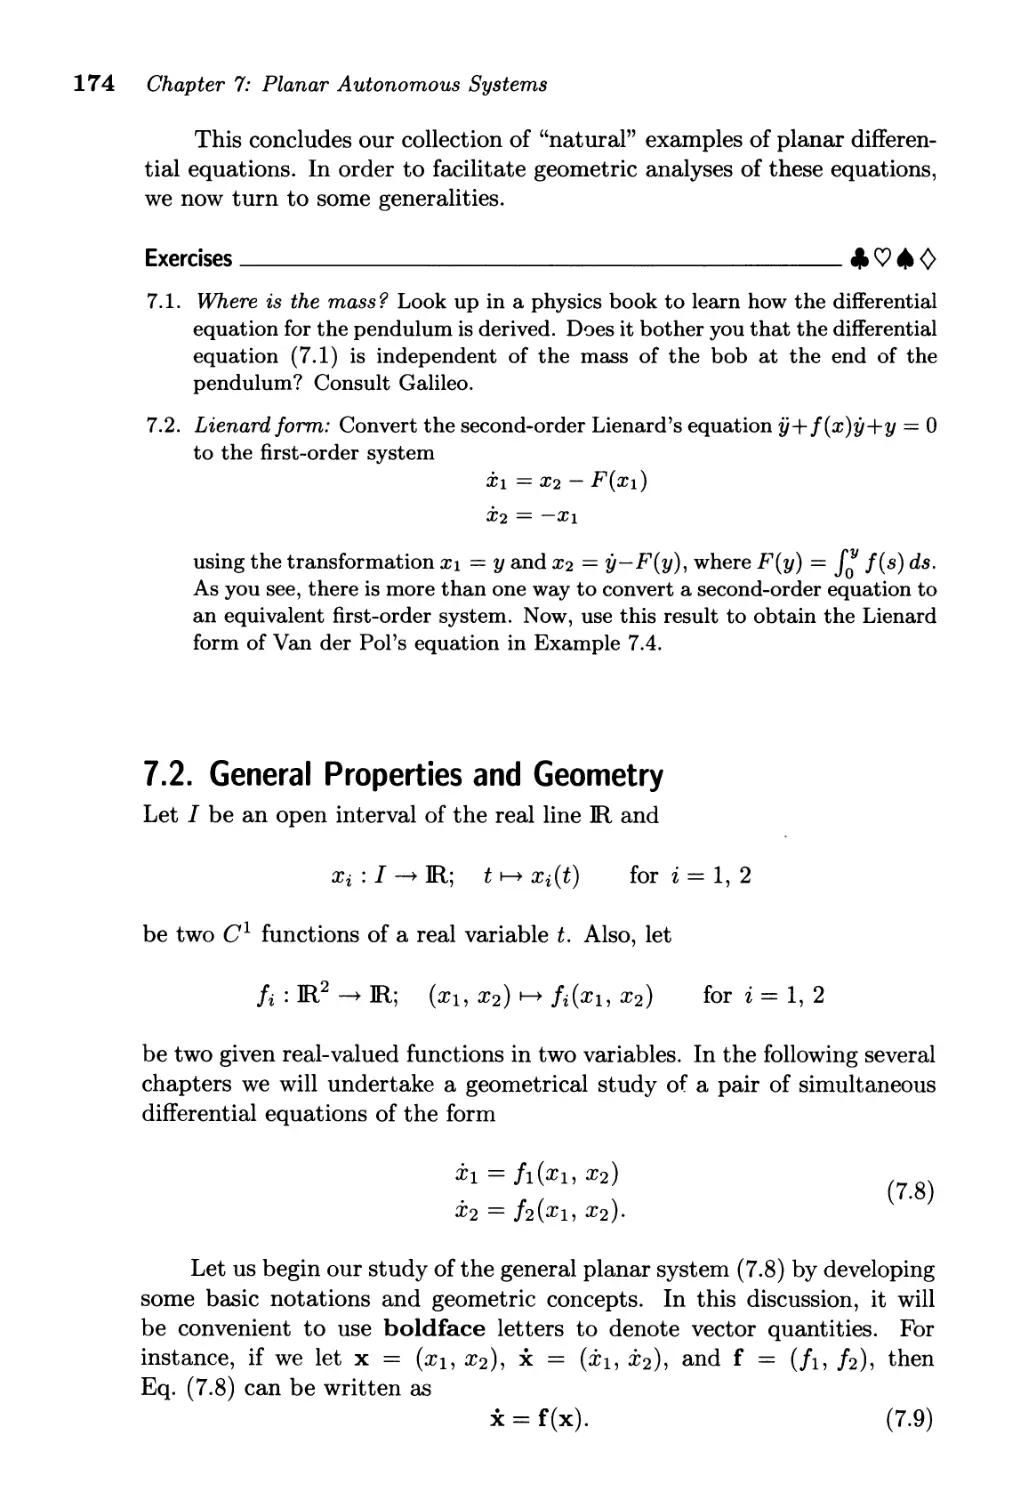 7.2. General Properties and Geometry